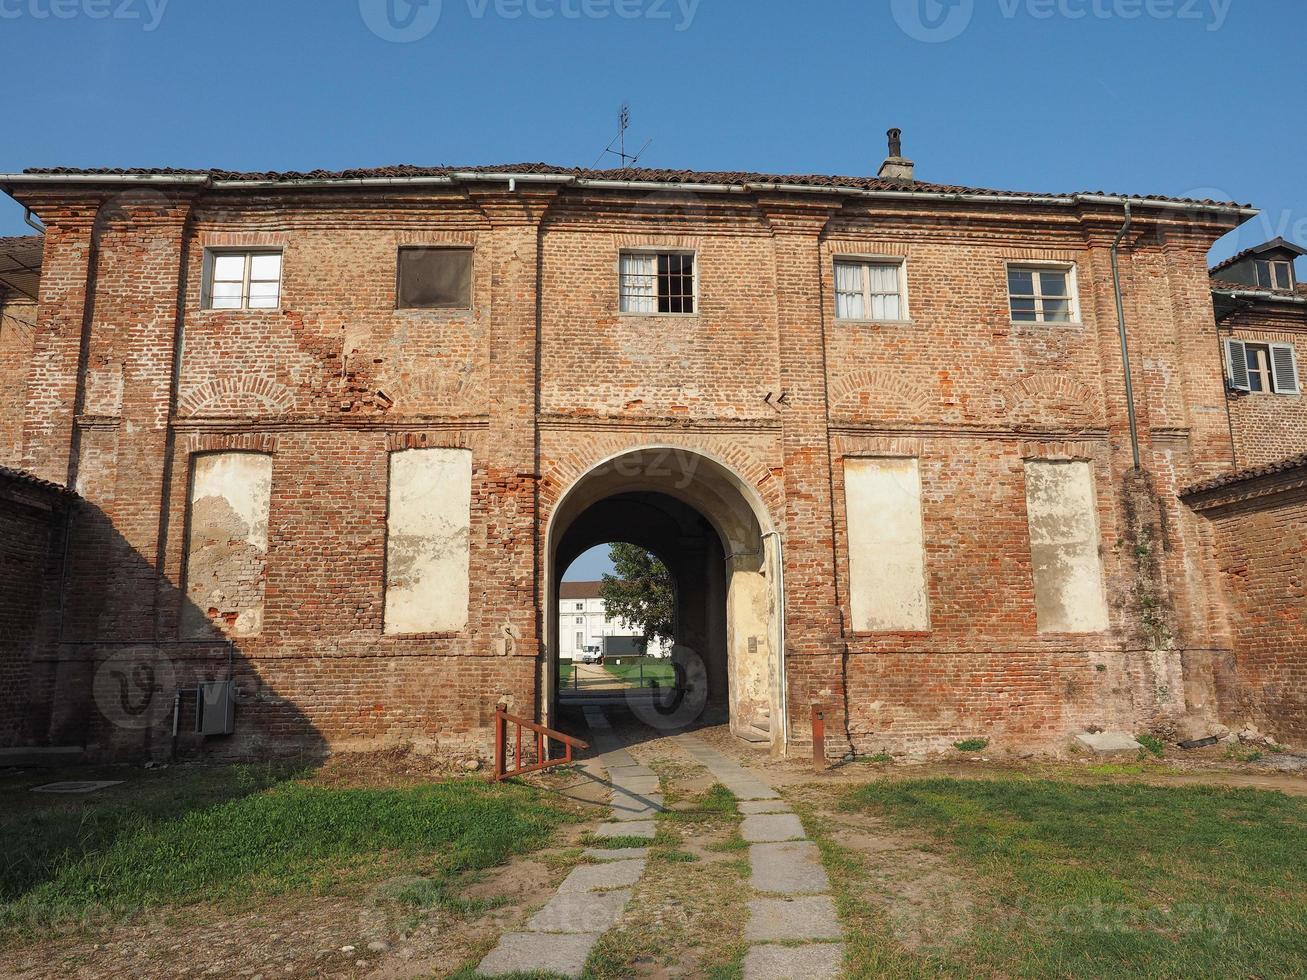 Palazzina di Stupinigi royal hunting lodge stables in Nichelino photo